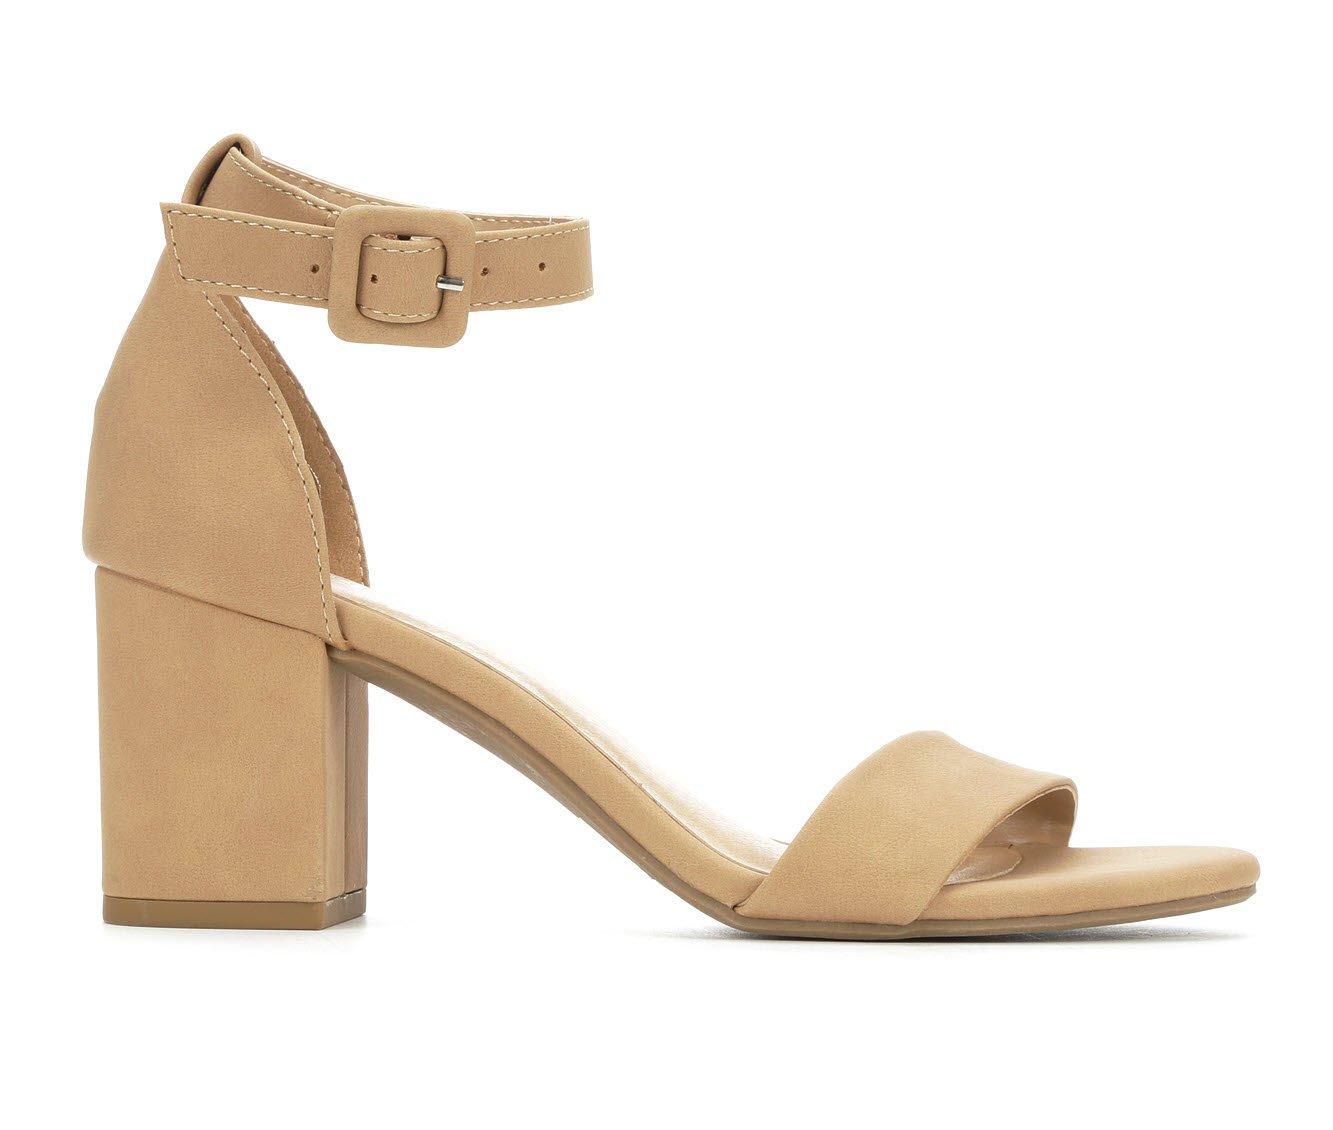 women platform oxford shoes t strap chunky heel summer sandals